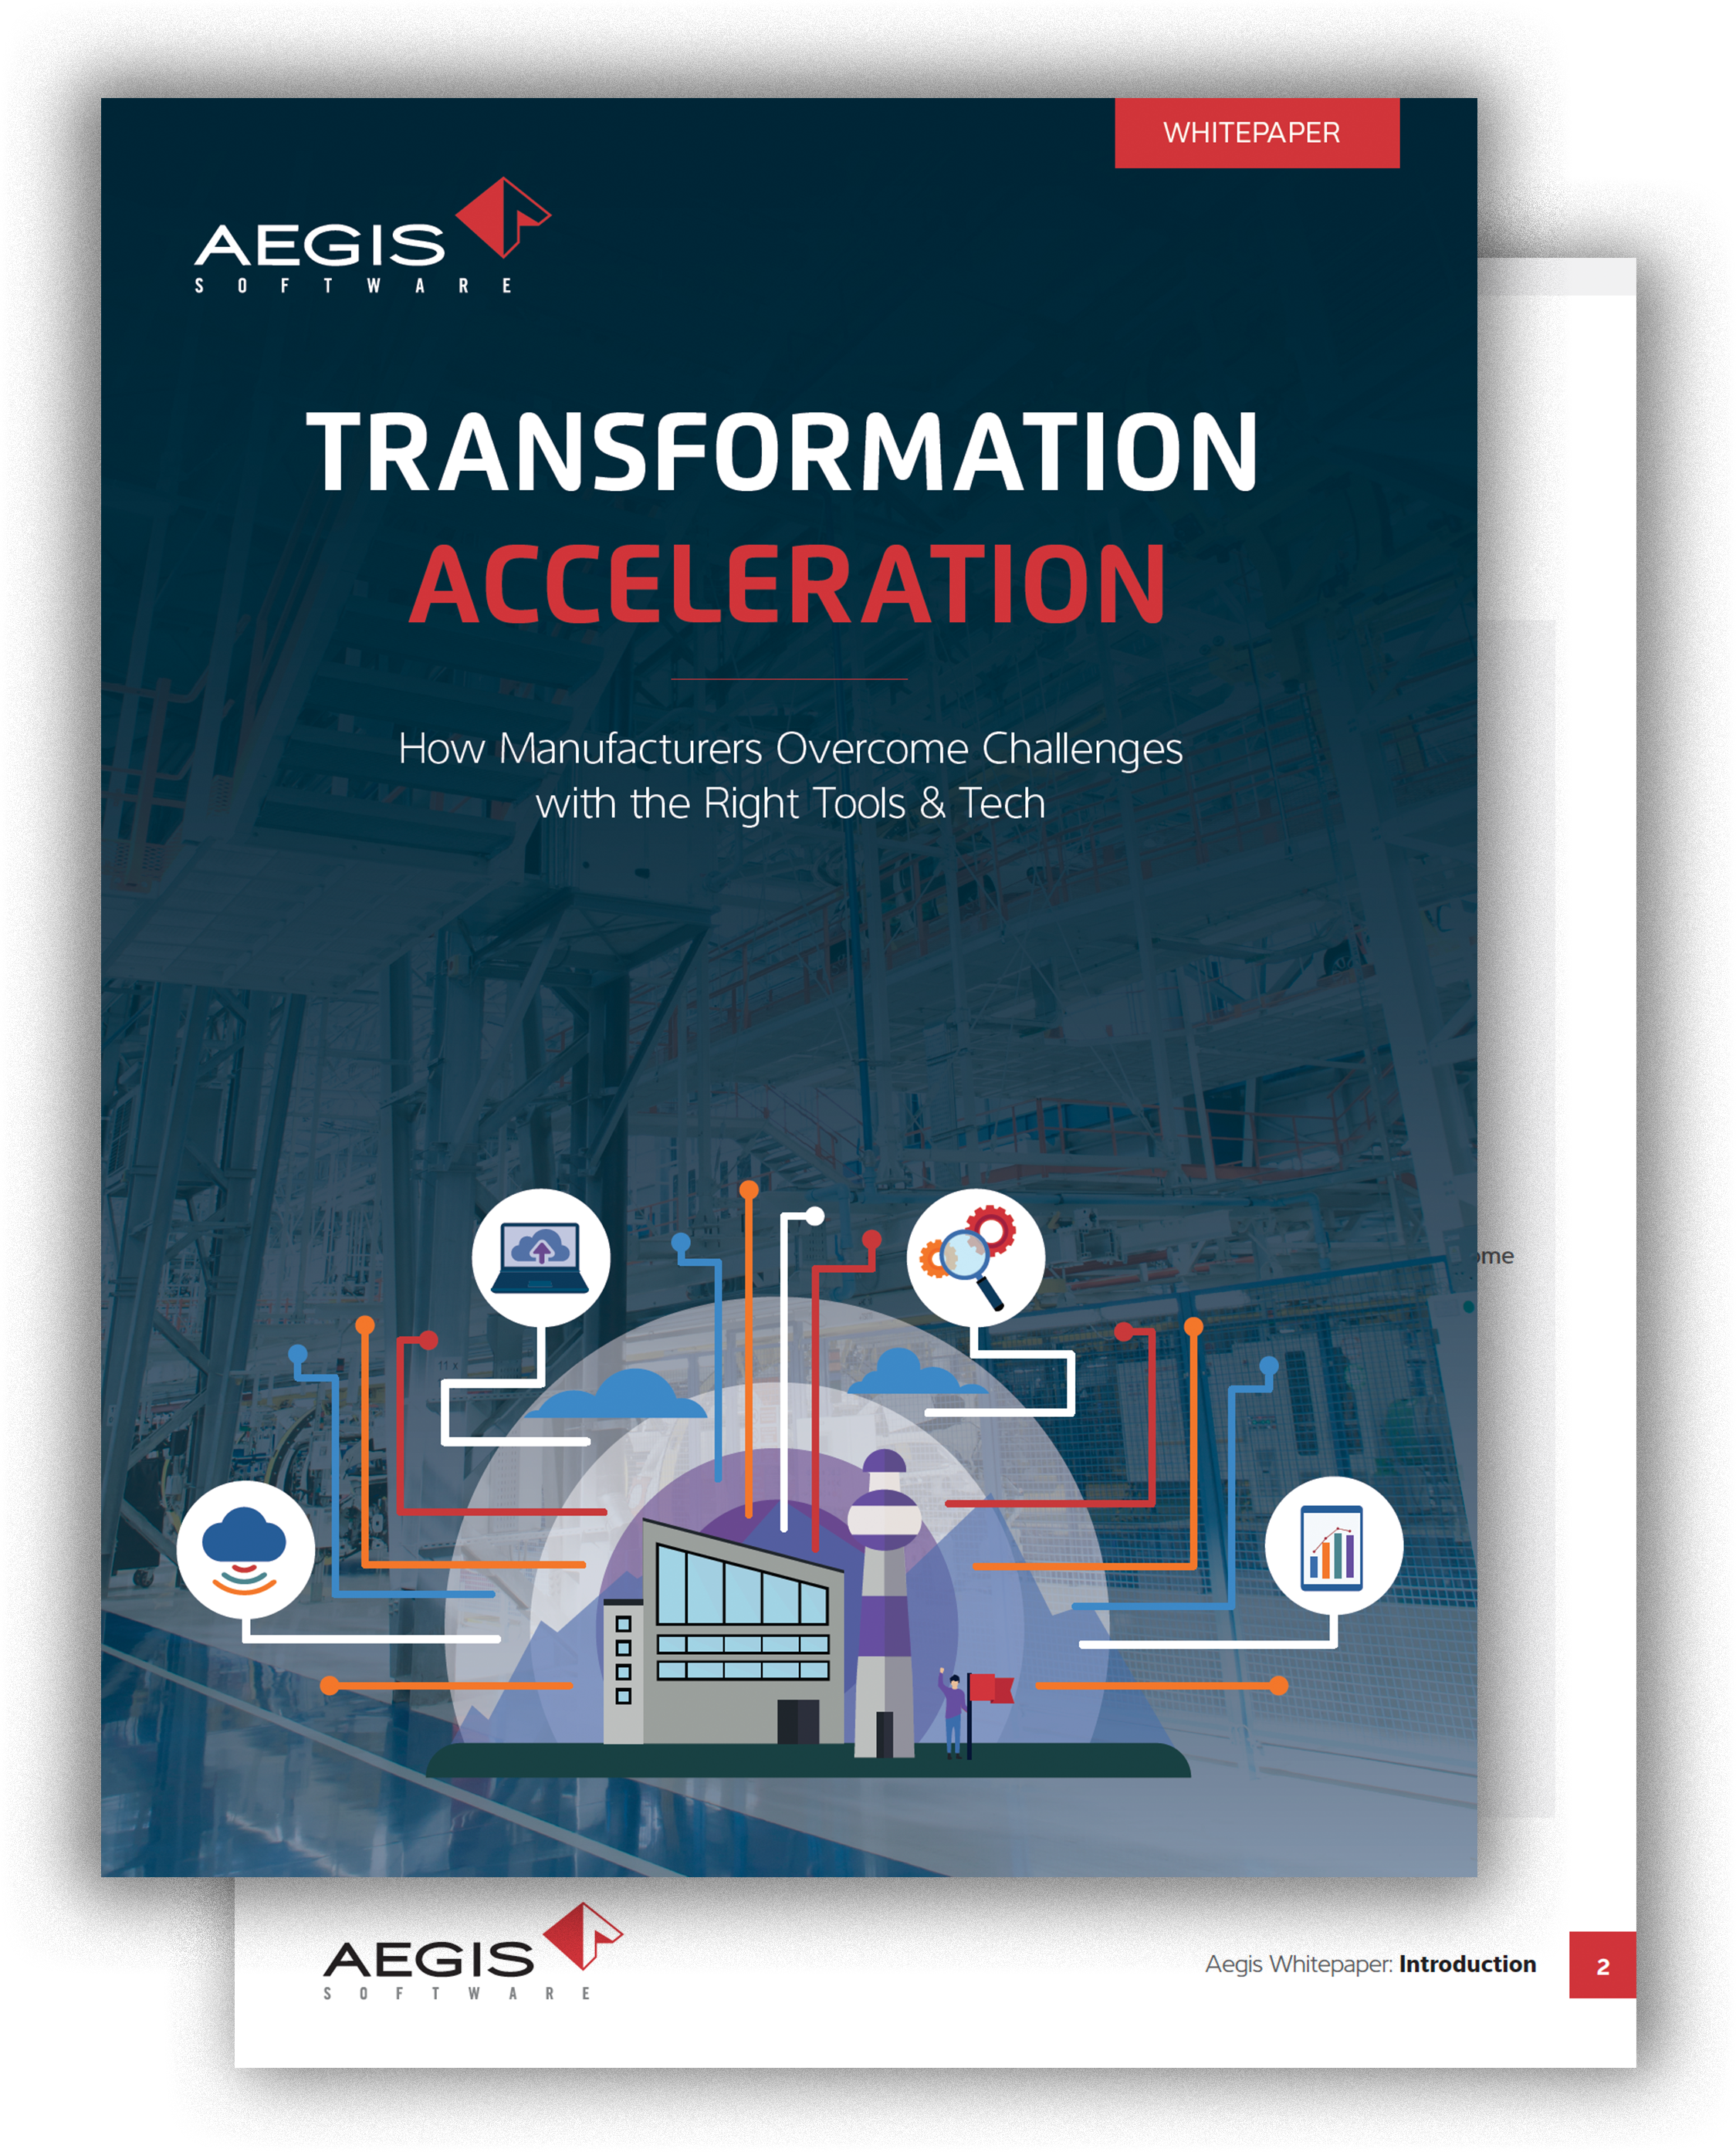 aegis-transformation-accelerations-whitepaper-thumbnail-080921